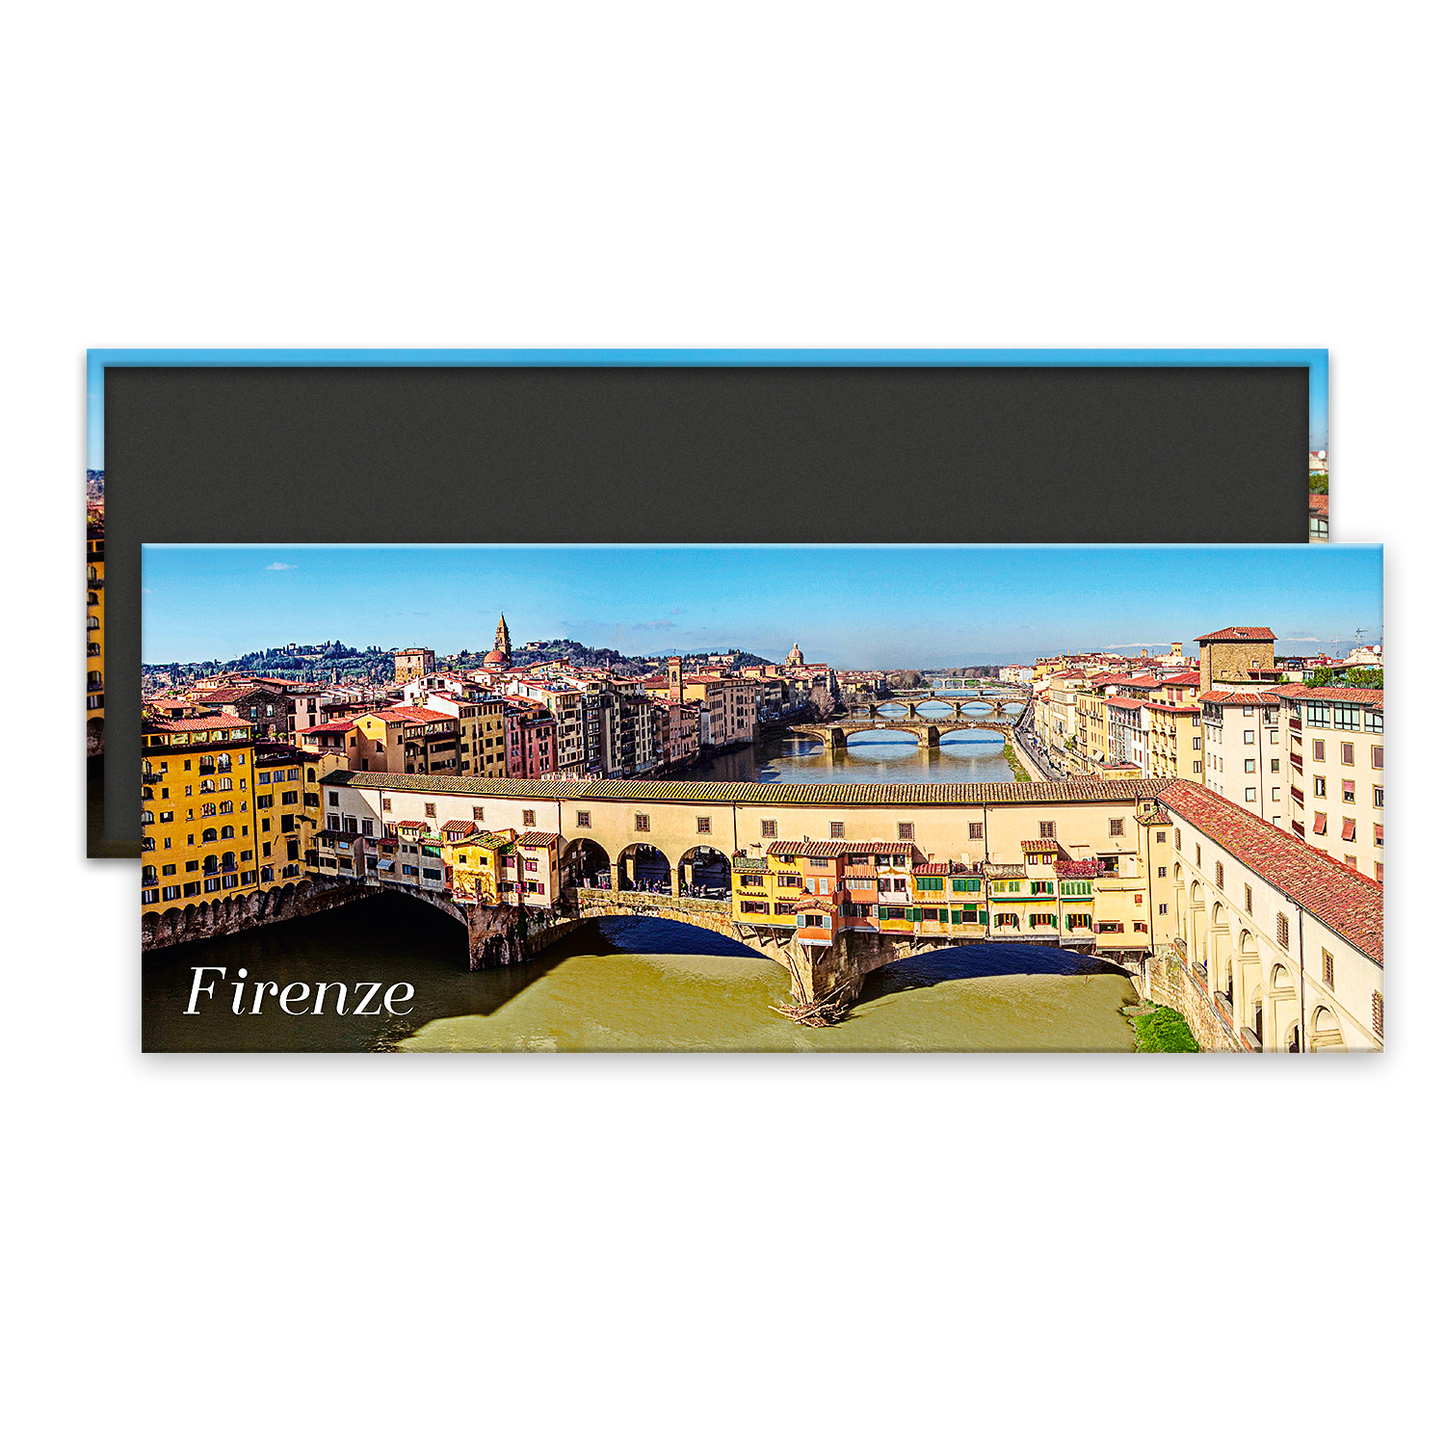 FI M 001 – Florenz, Ponte Vecchio